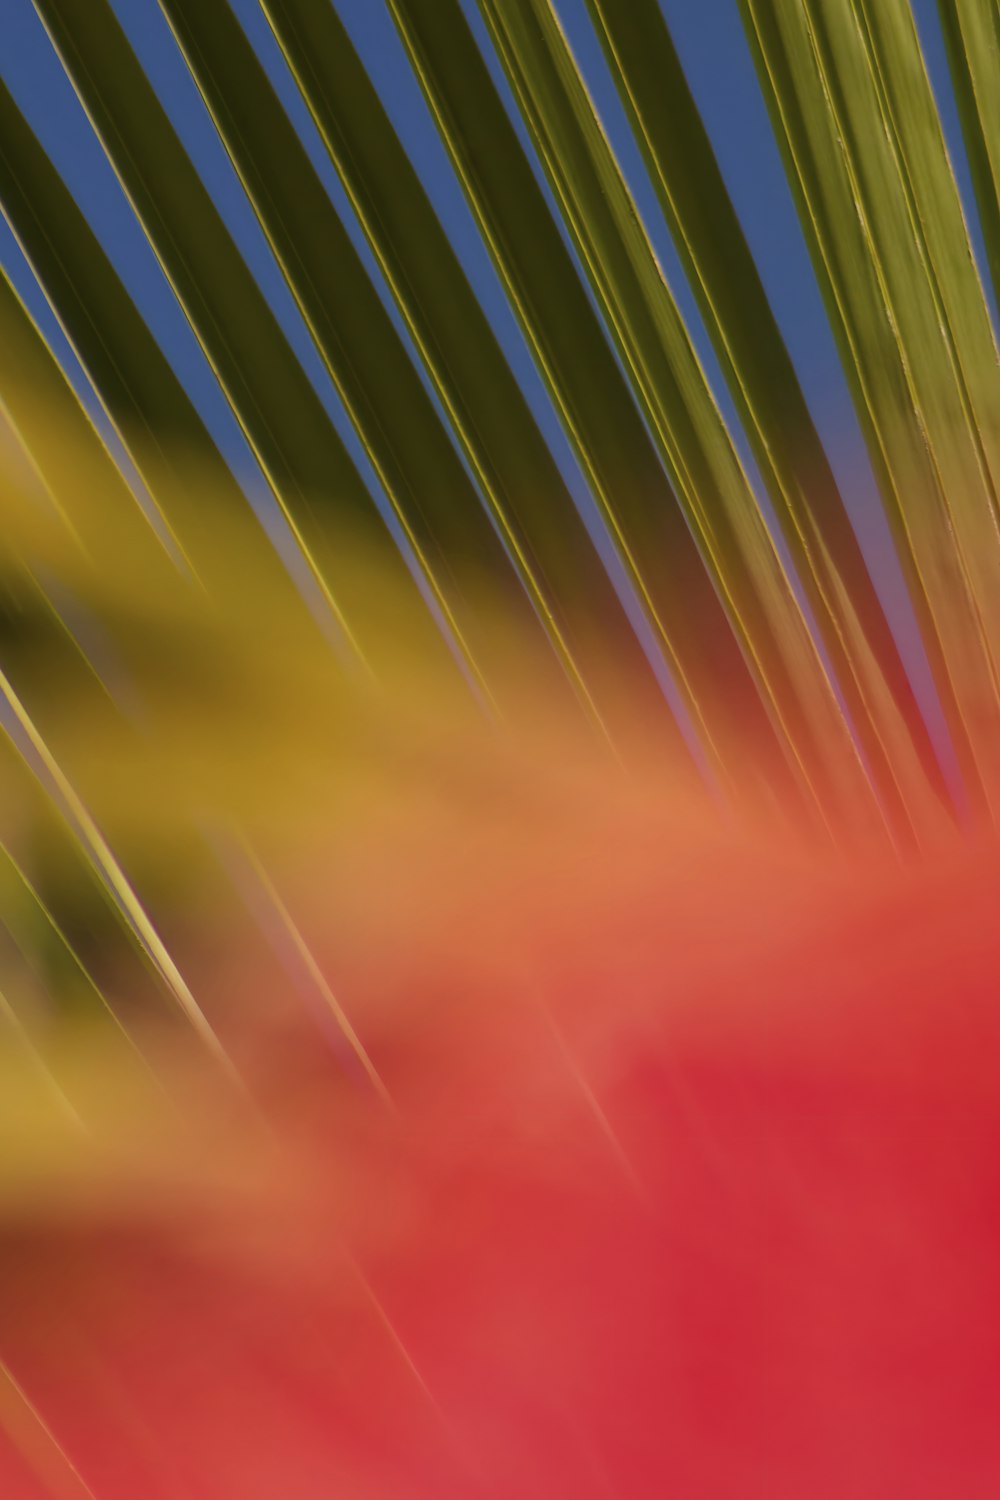 a blurry photo of a palm leaf